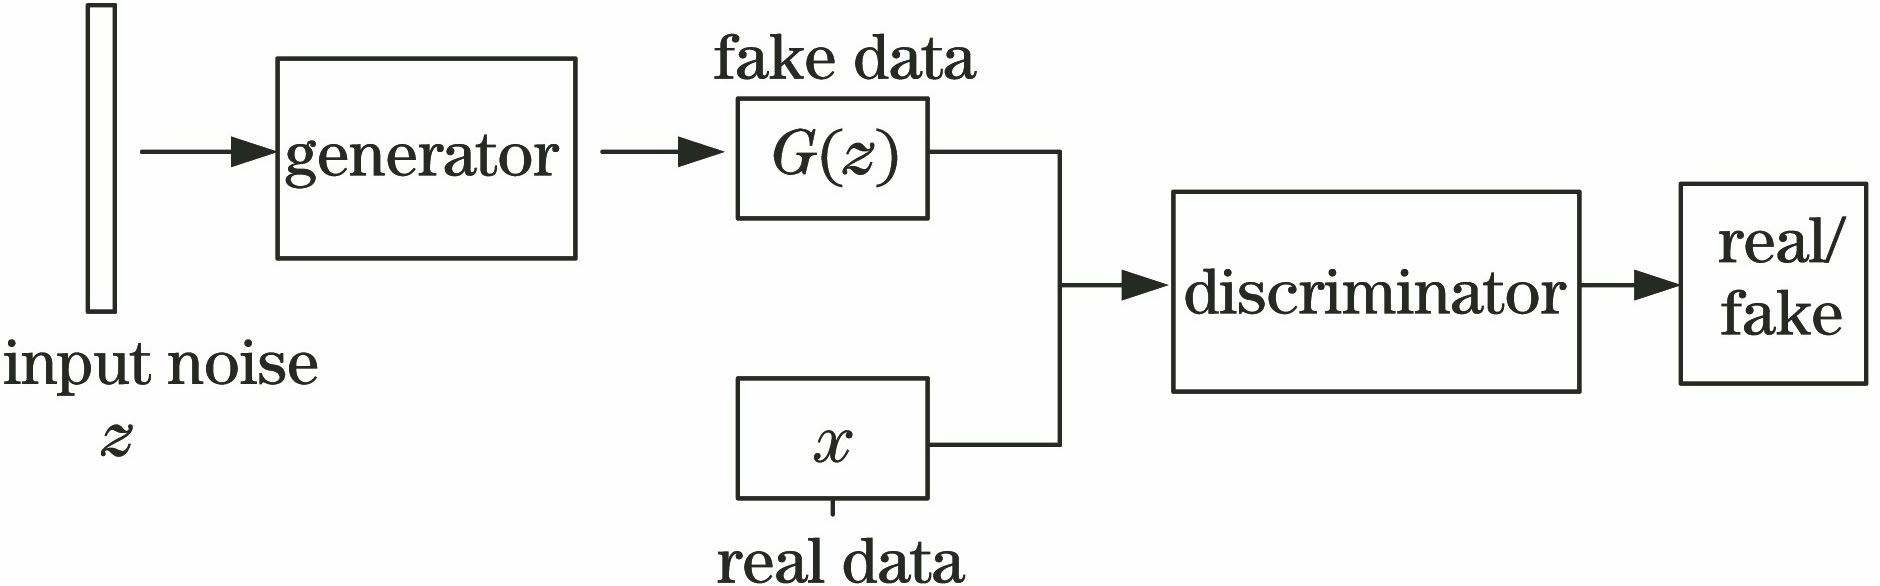 GAN framework structure